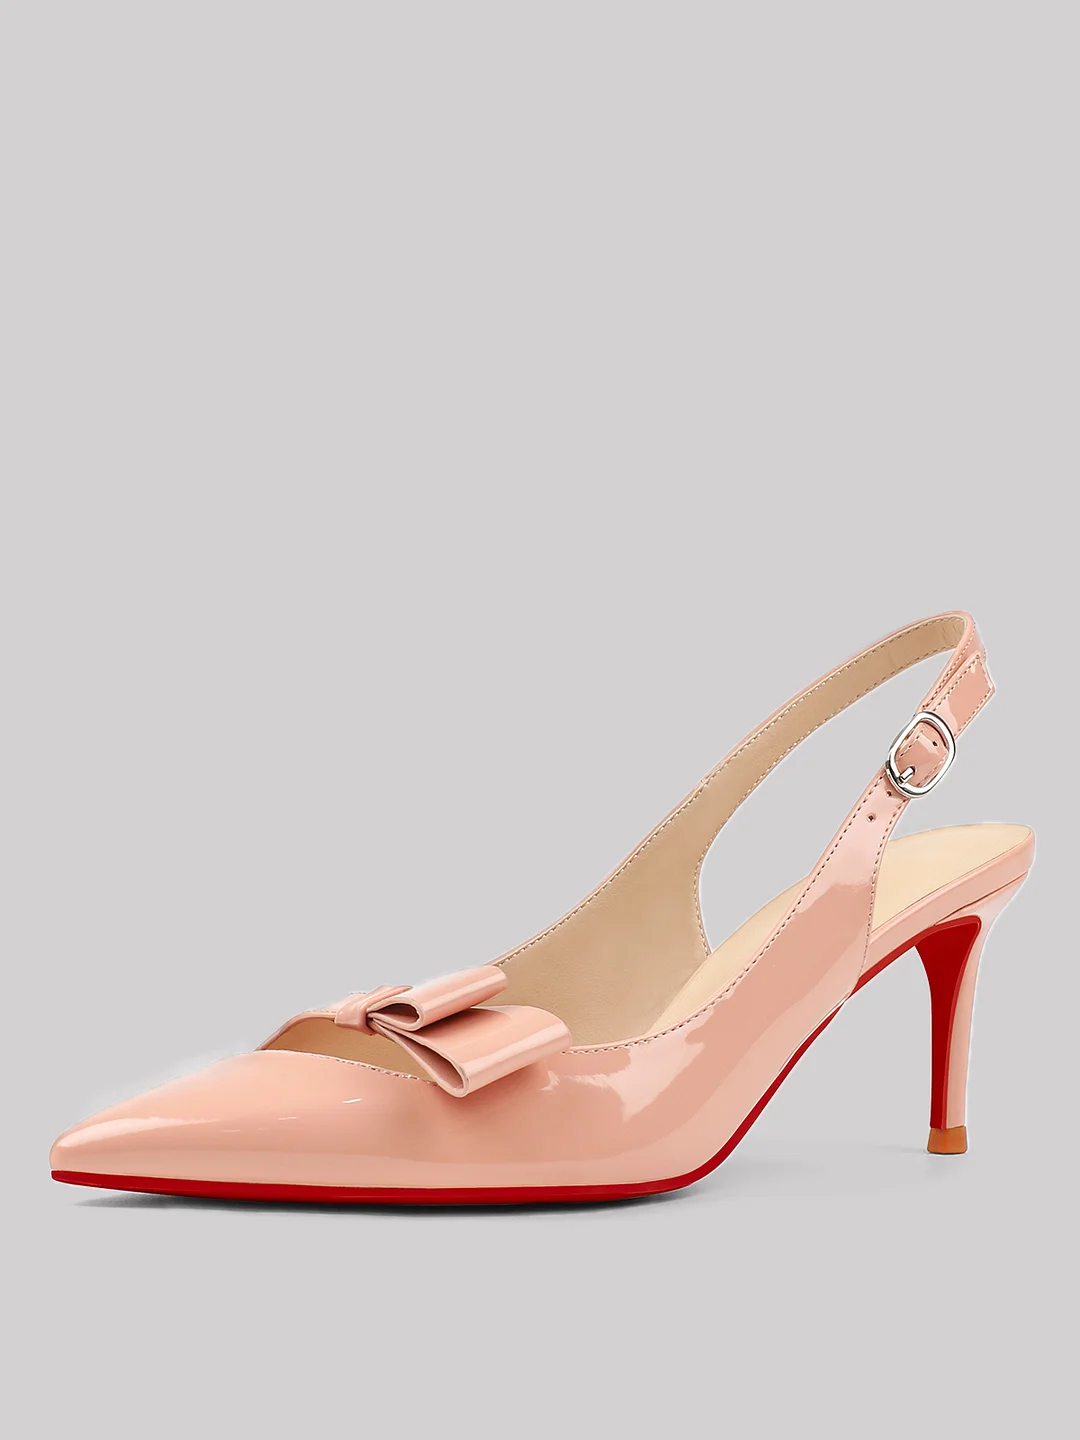 65mm Women's Pointed Toe Kitten Heel Slingback Pumps for Wedding Red Bottom Patent Heels